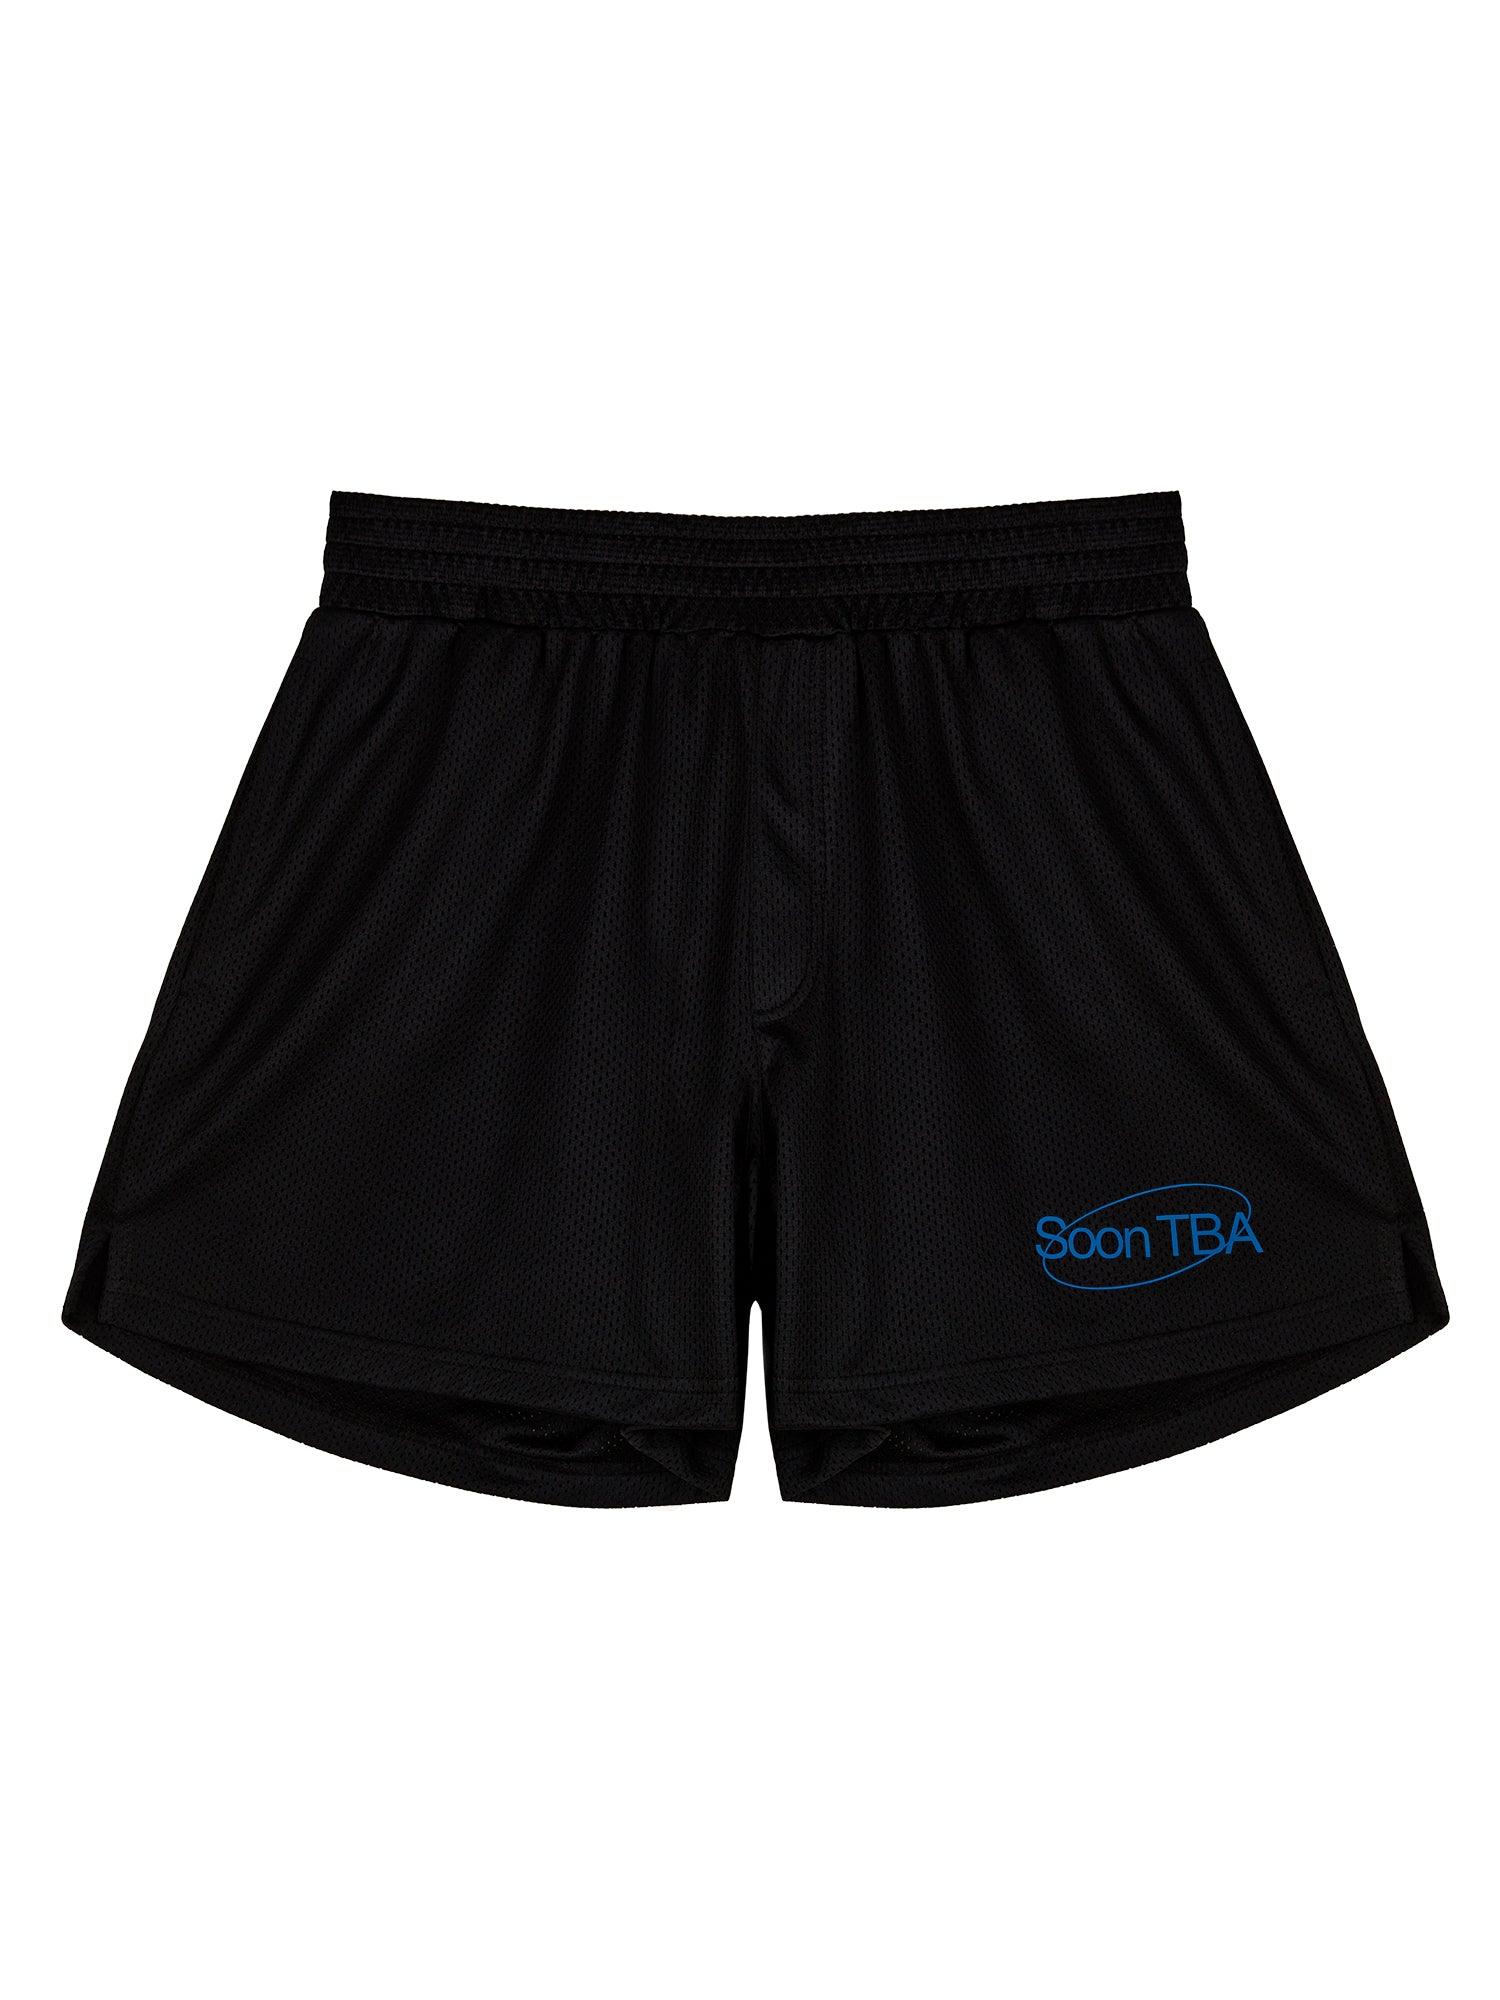 Soon TBA Basketball Shorts - SOON TO BE ANNOUNCED